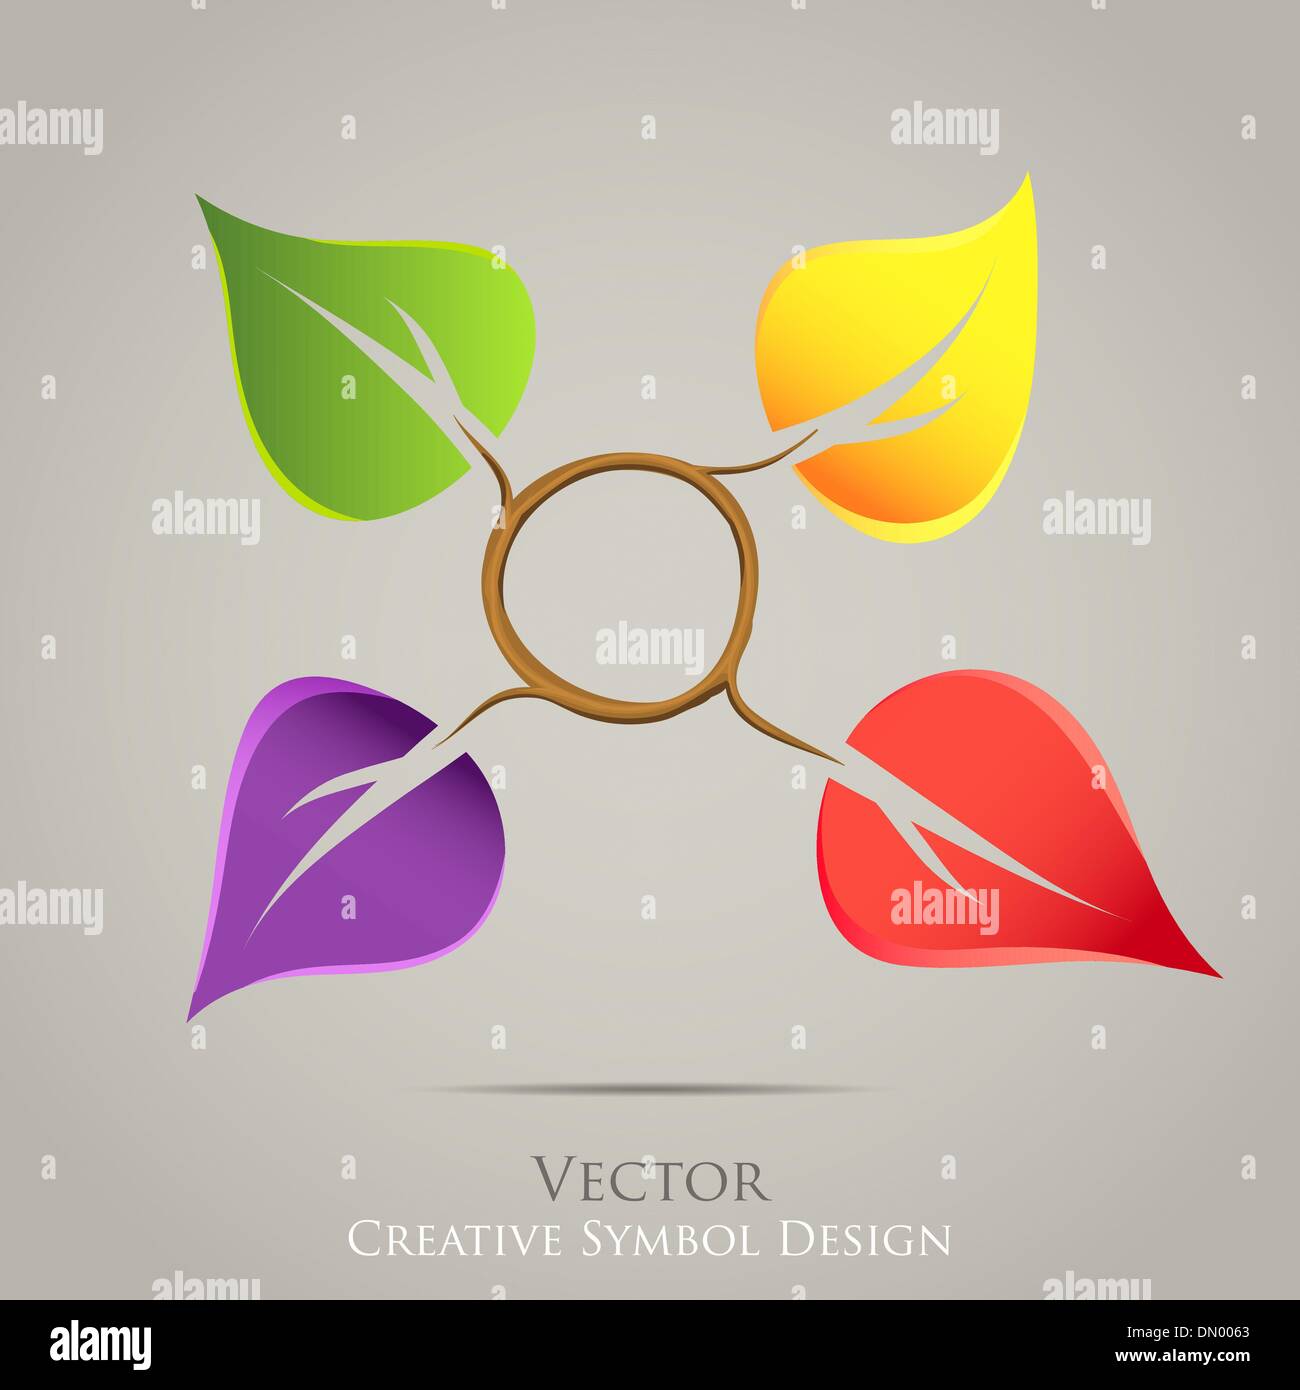 Kreative Natur Emblem Vektor Icon. Farbenfrohes design Stock Vektor